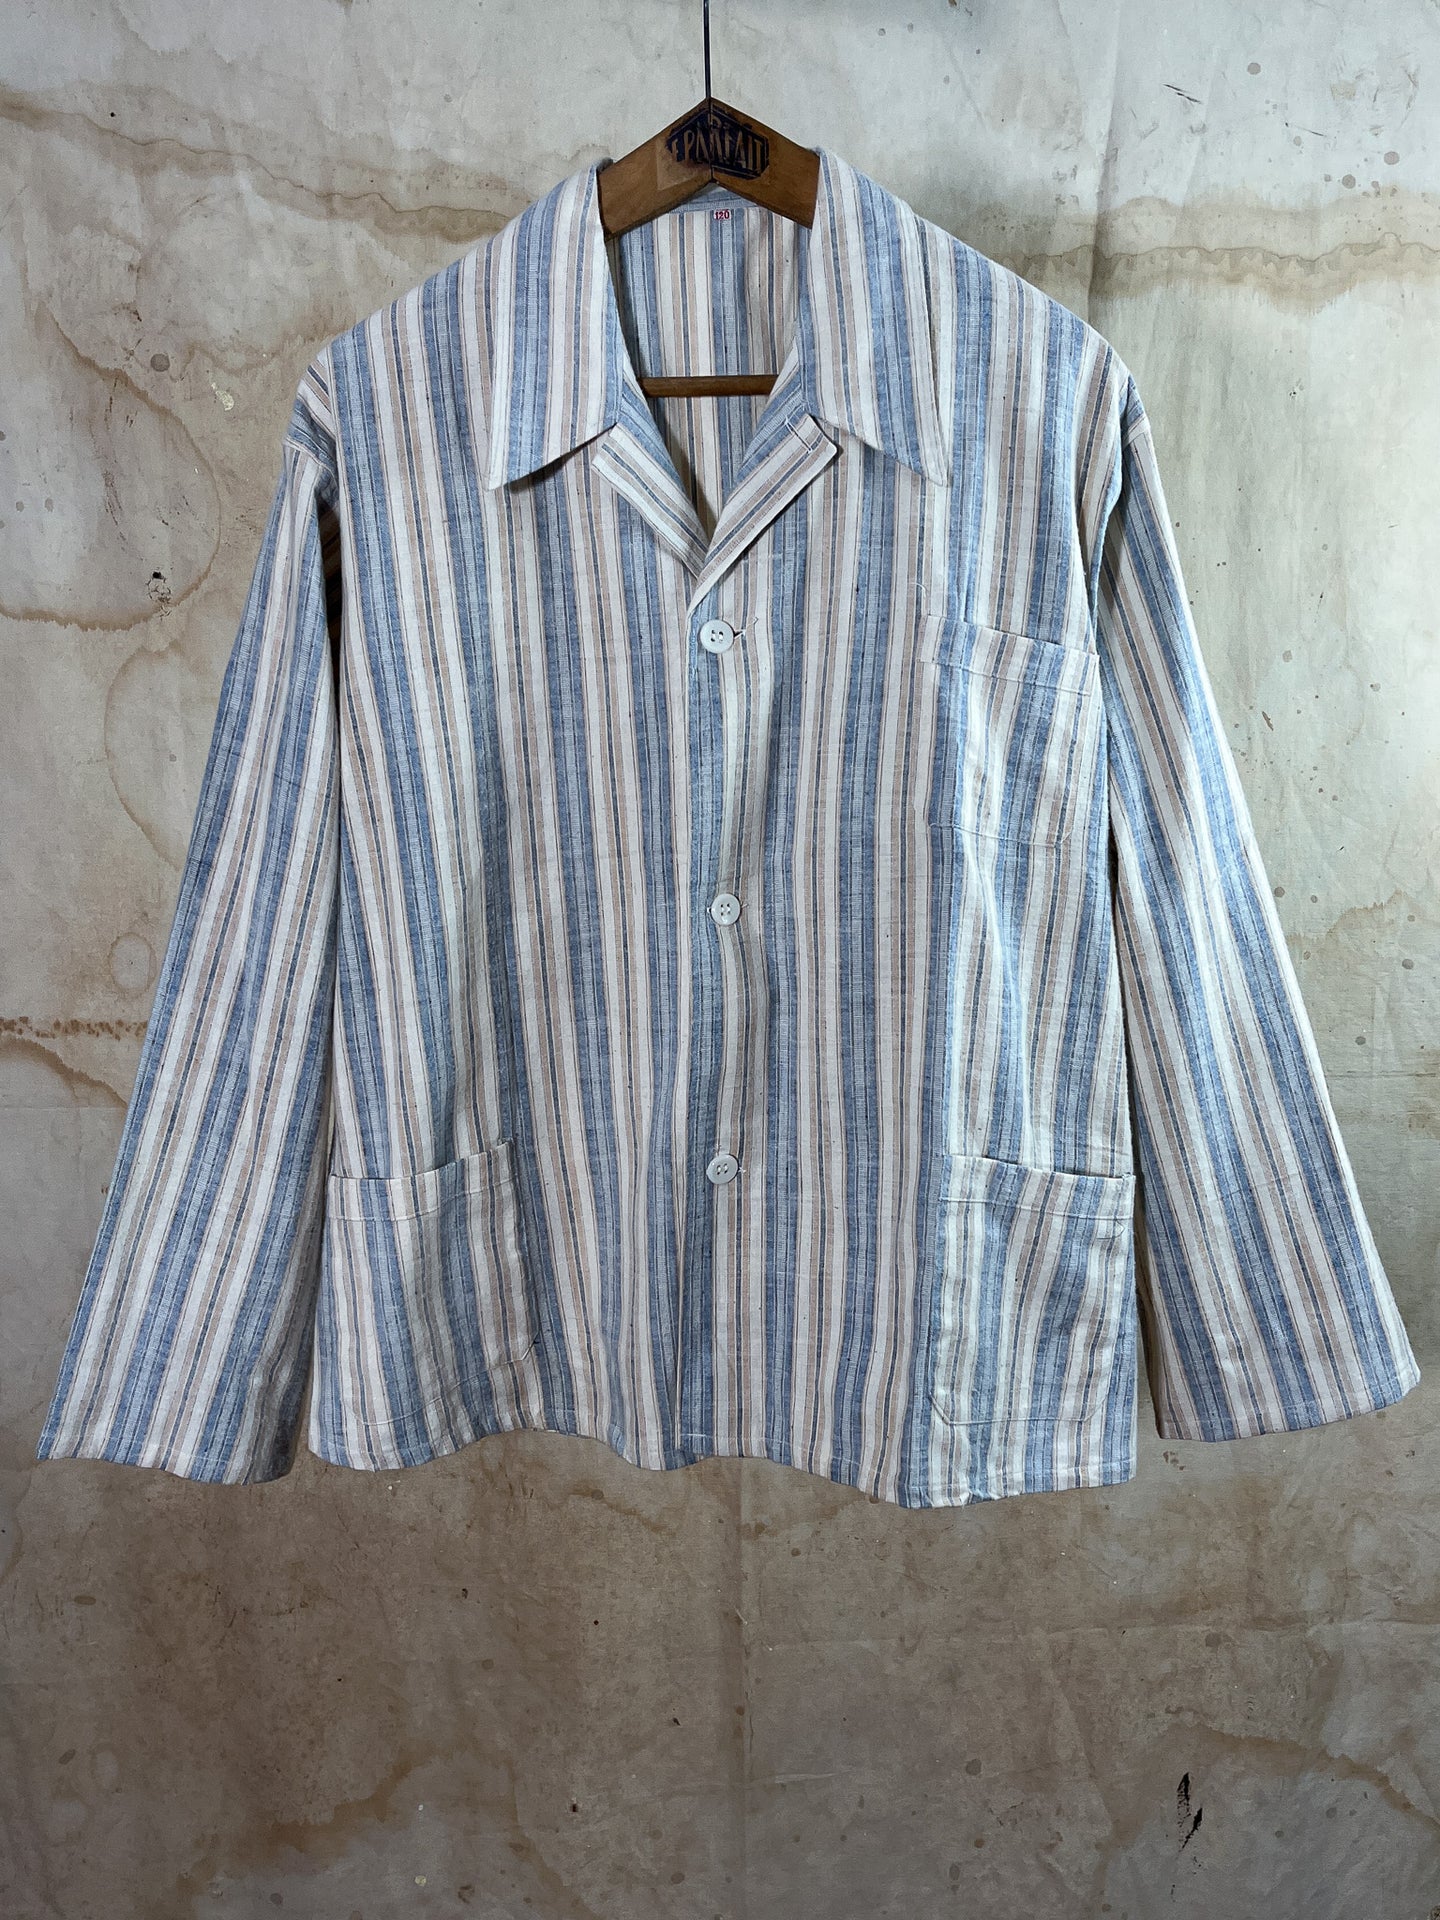 French Flannel Striped Pajama Shirt c. 1940s